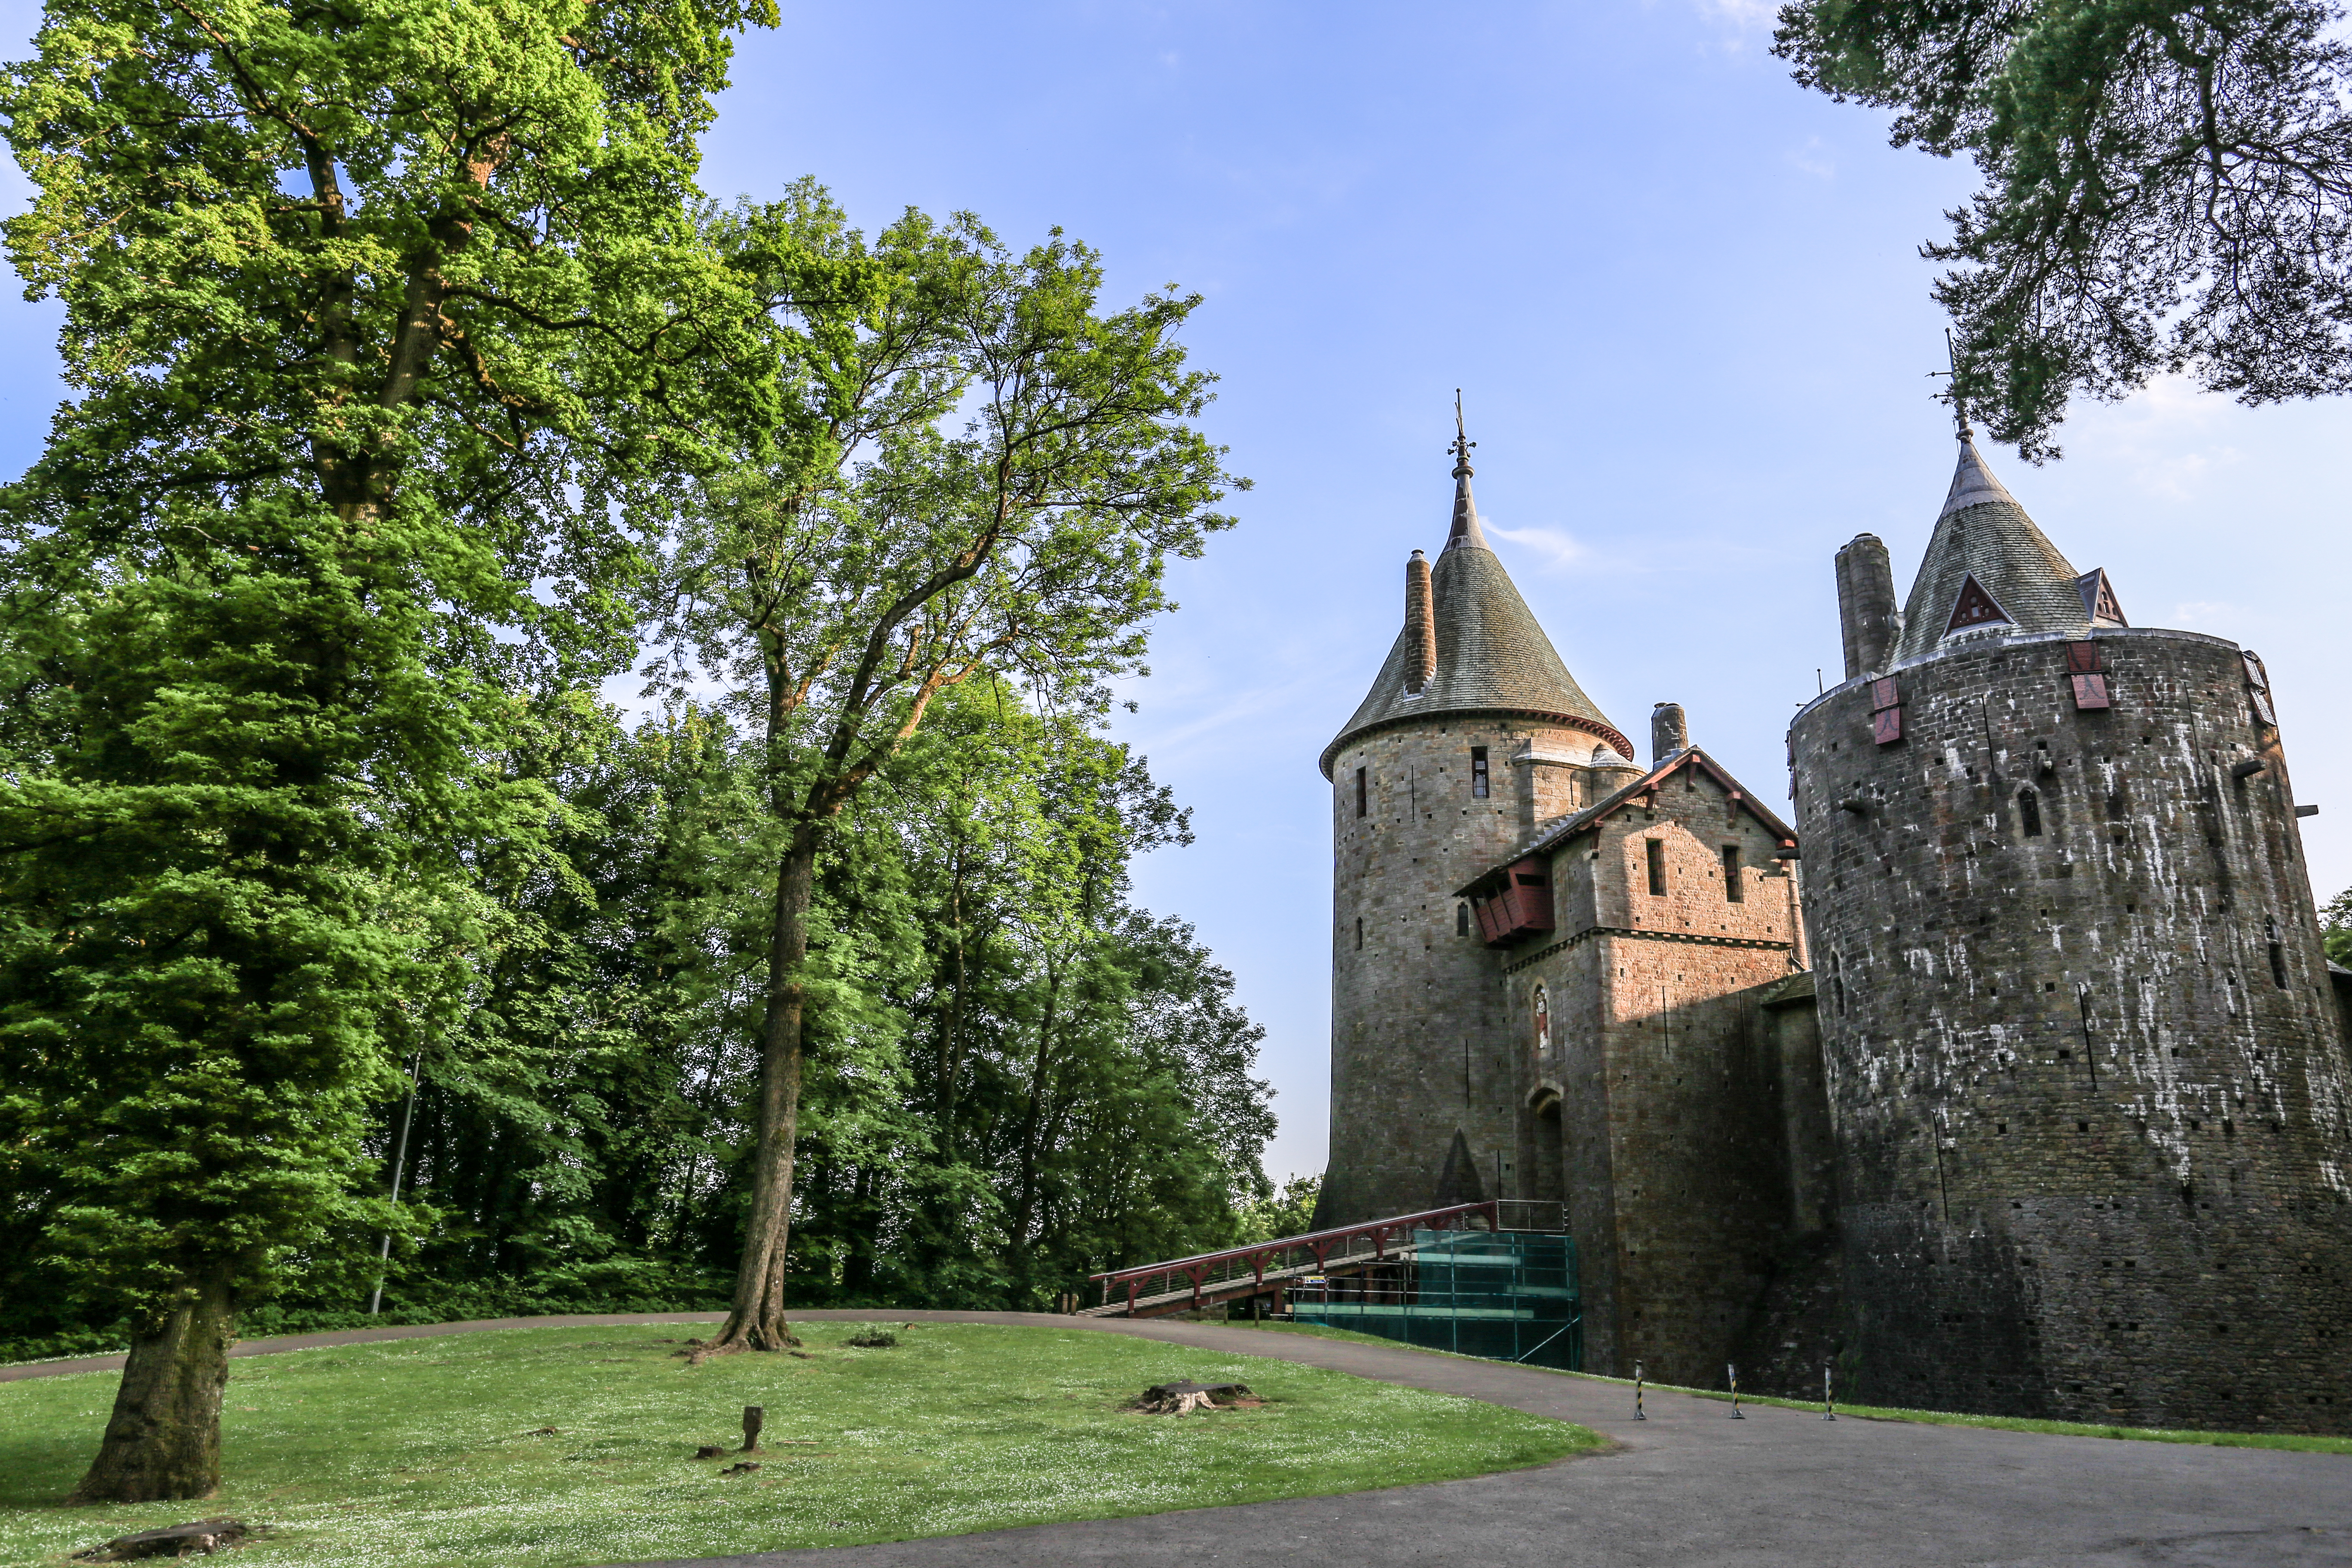 The Fairytale Castle Coch